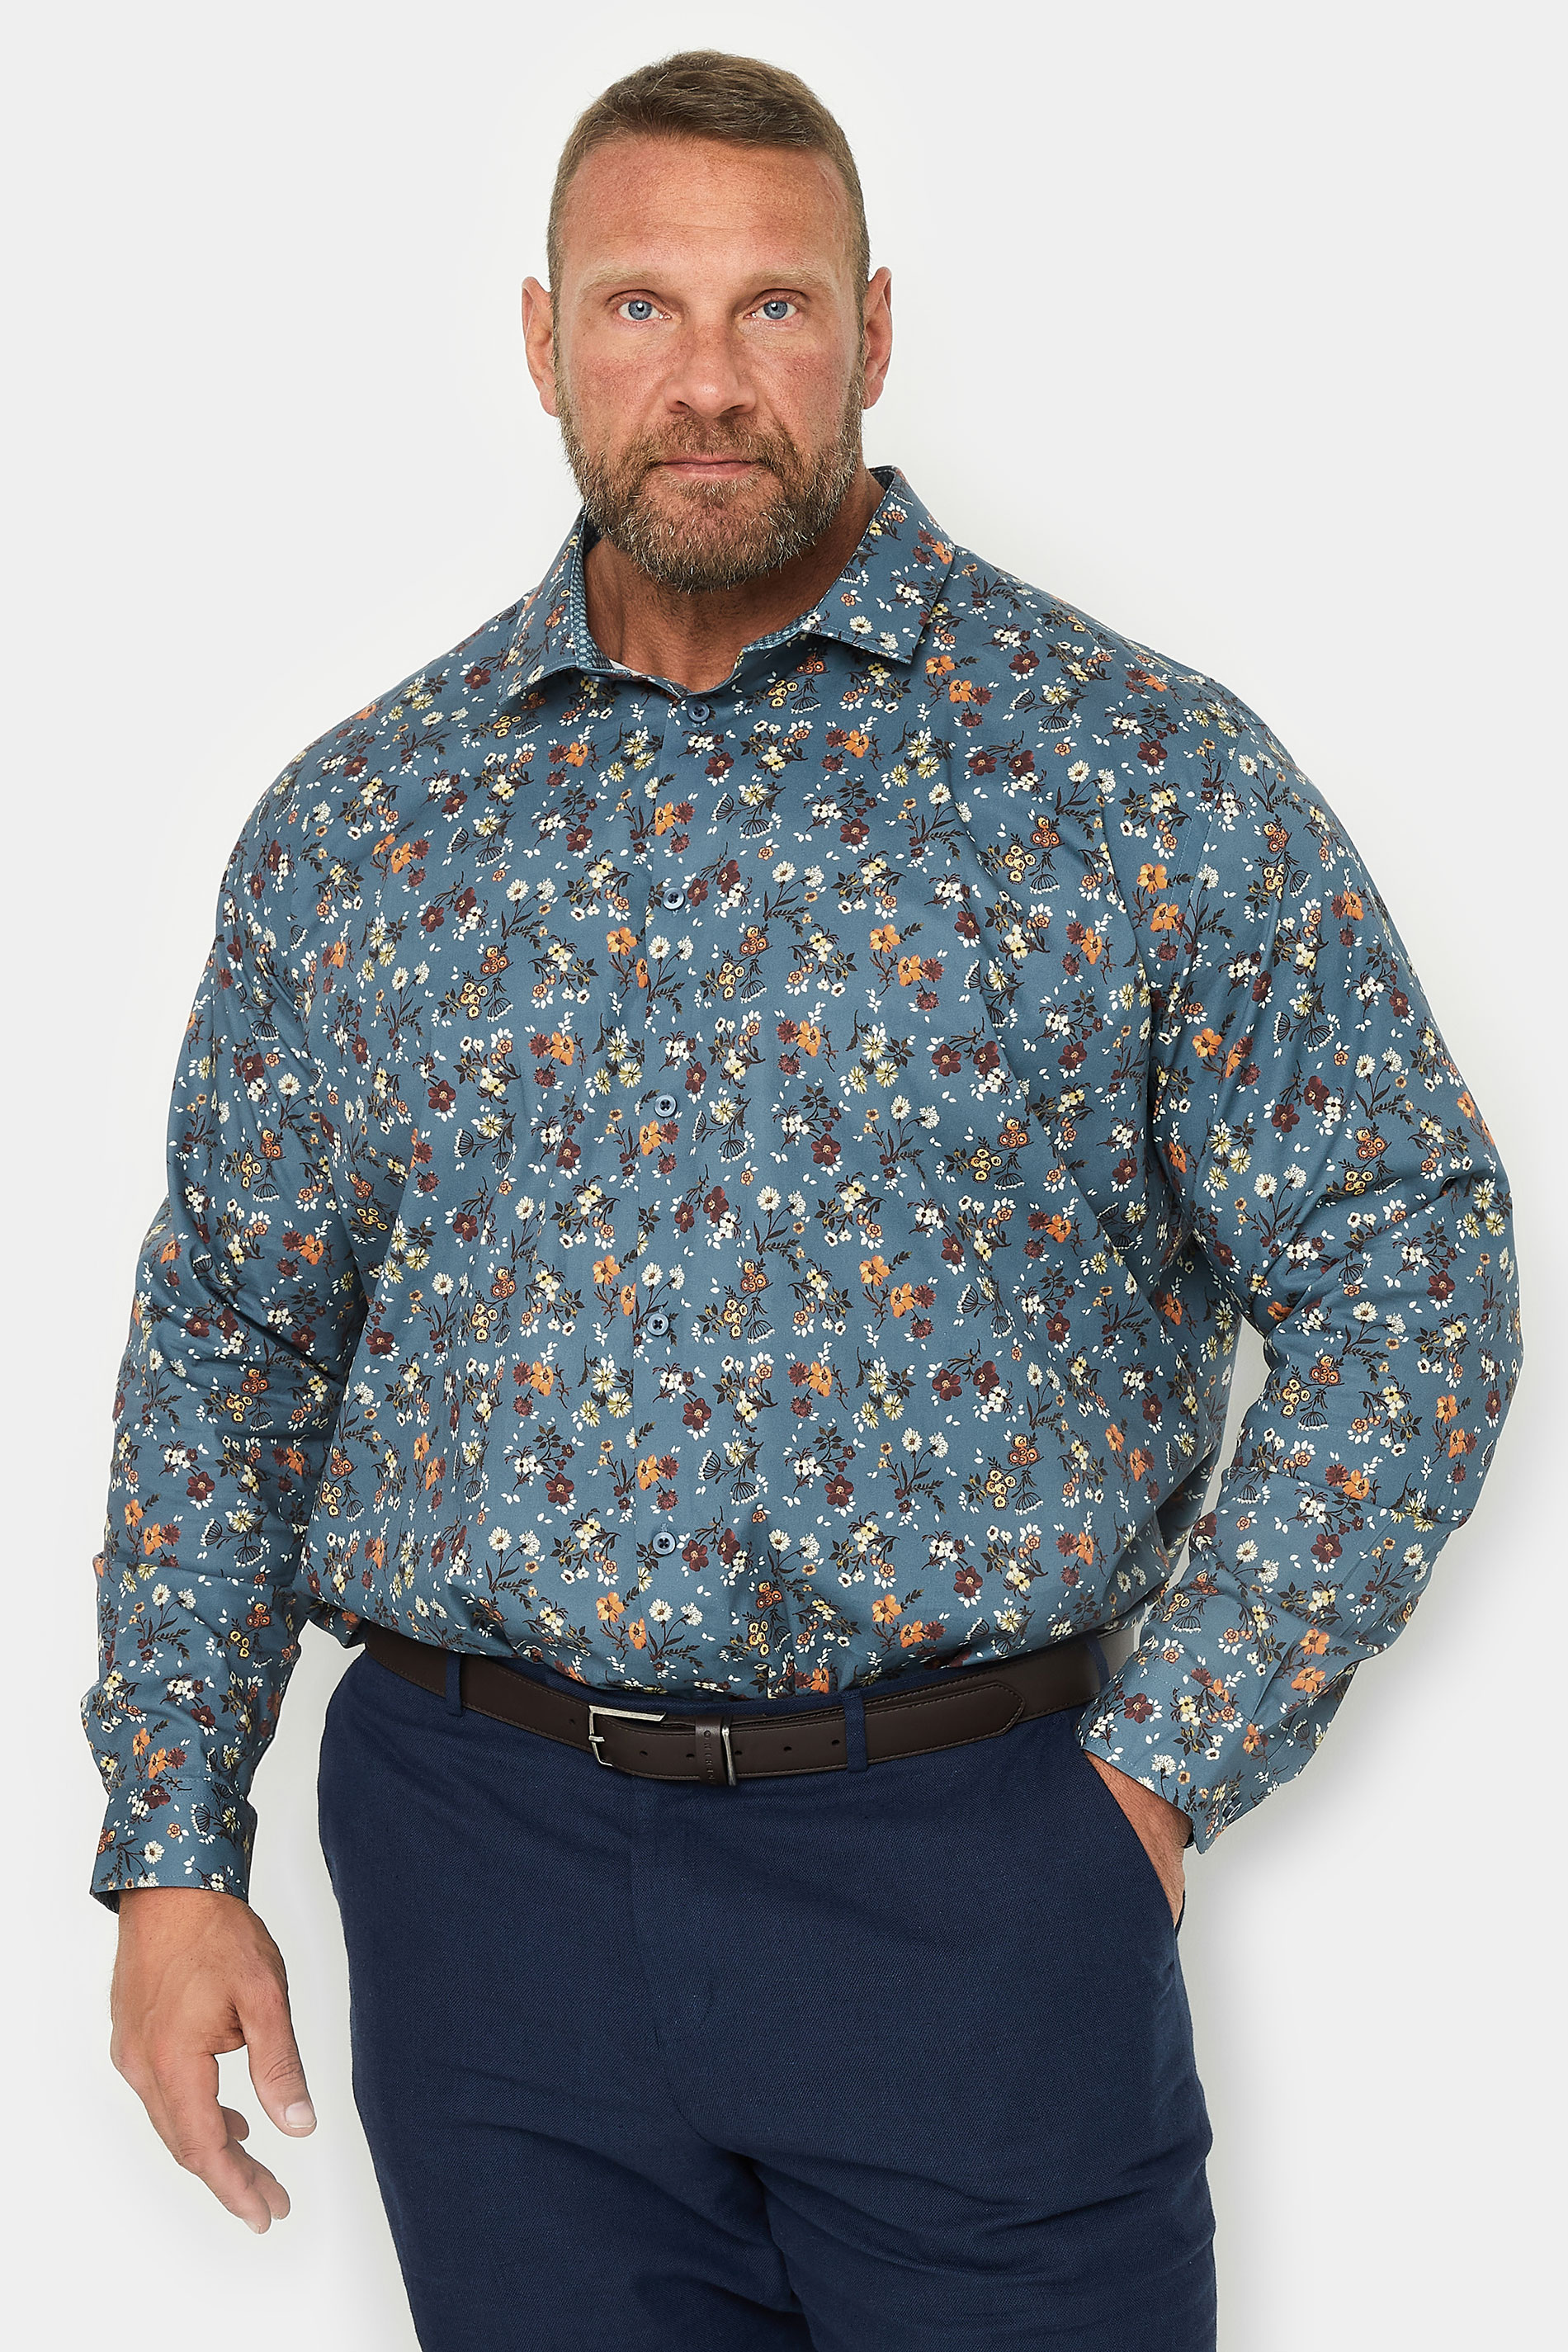 BadRhino Big & Tall Premium Blue Floral Print Long Sleeve Shirt | BadRhino 2